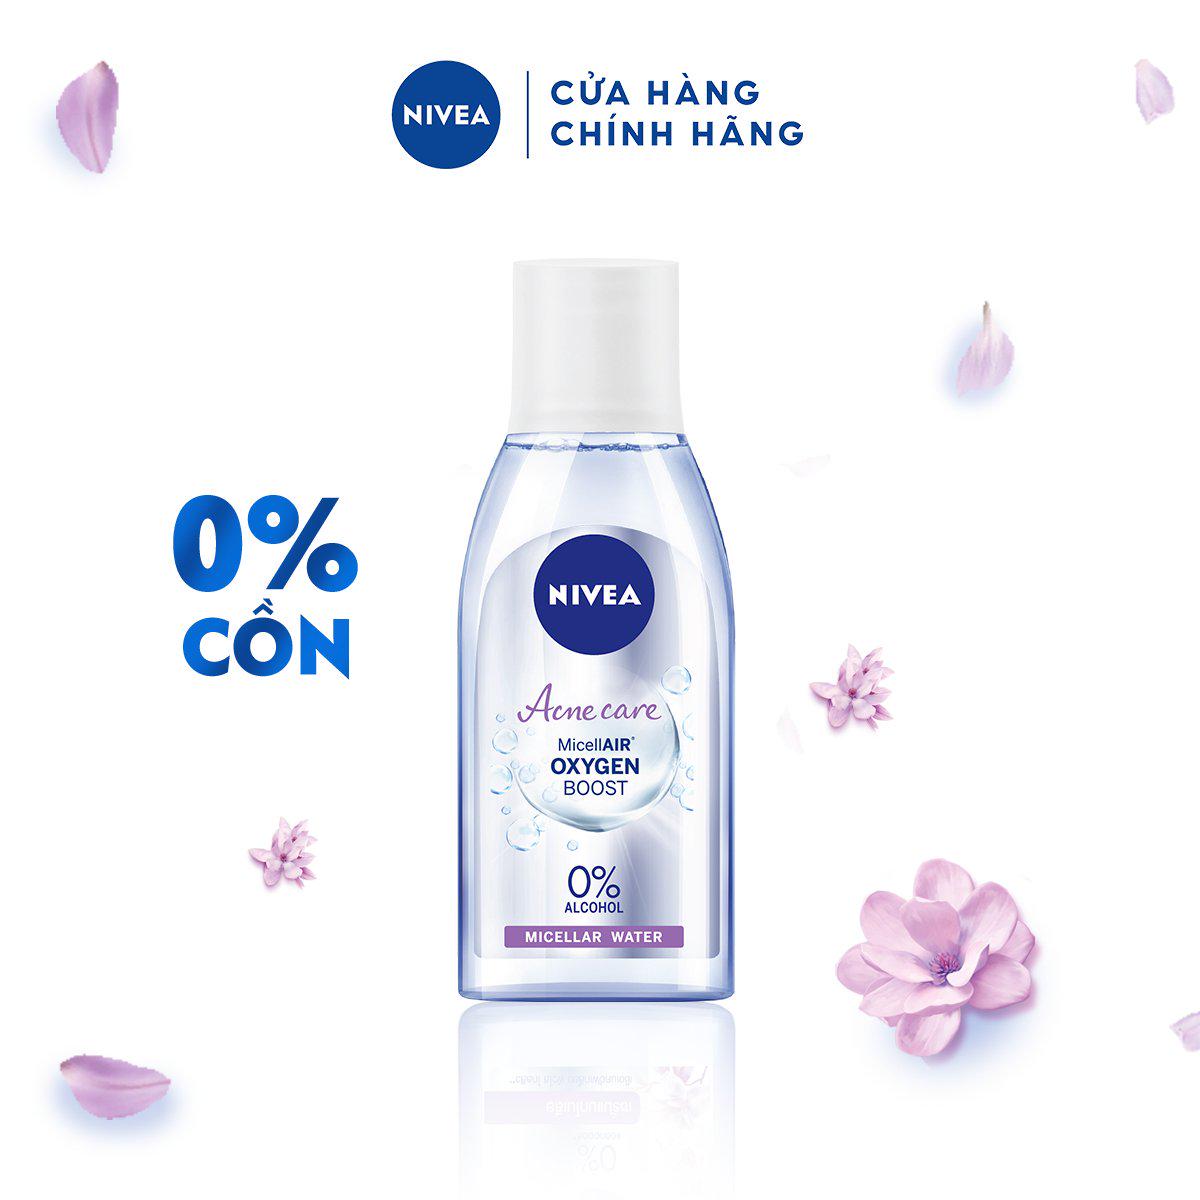 Nước tẩy trang Nivea cho da mụn Acne Care Makeup Clear Micellar Water 125ml – 89270